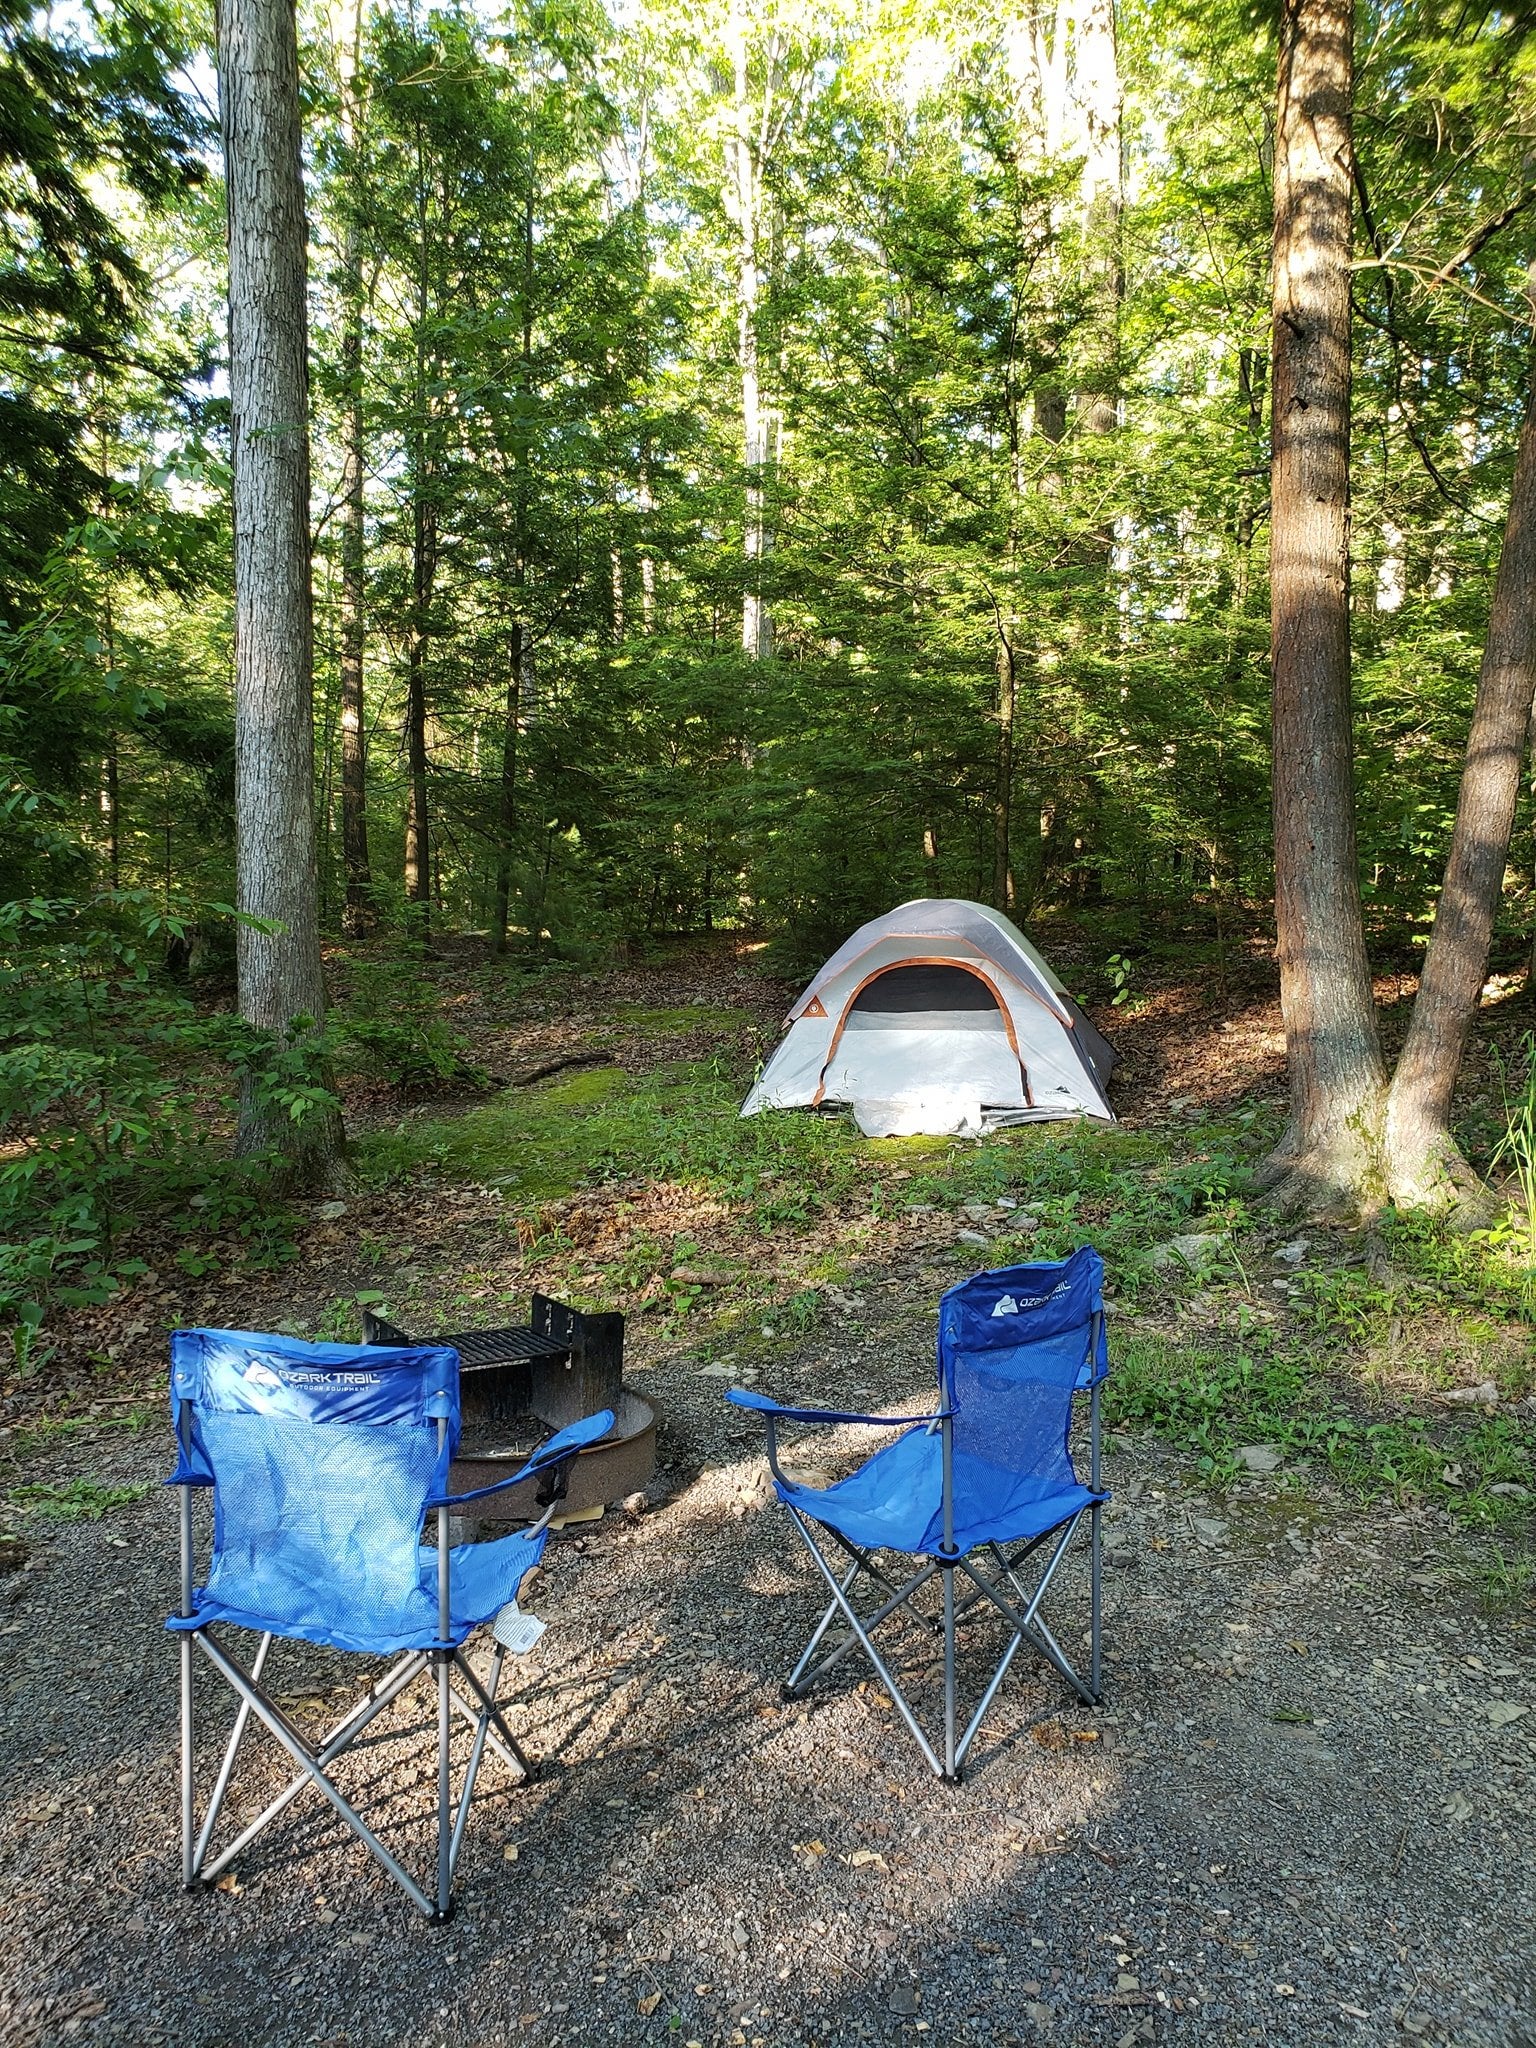 Our tent setup